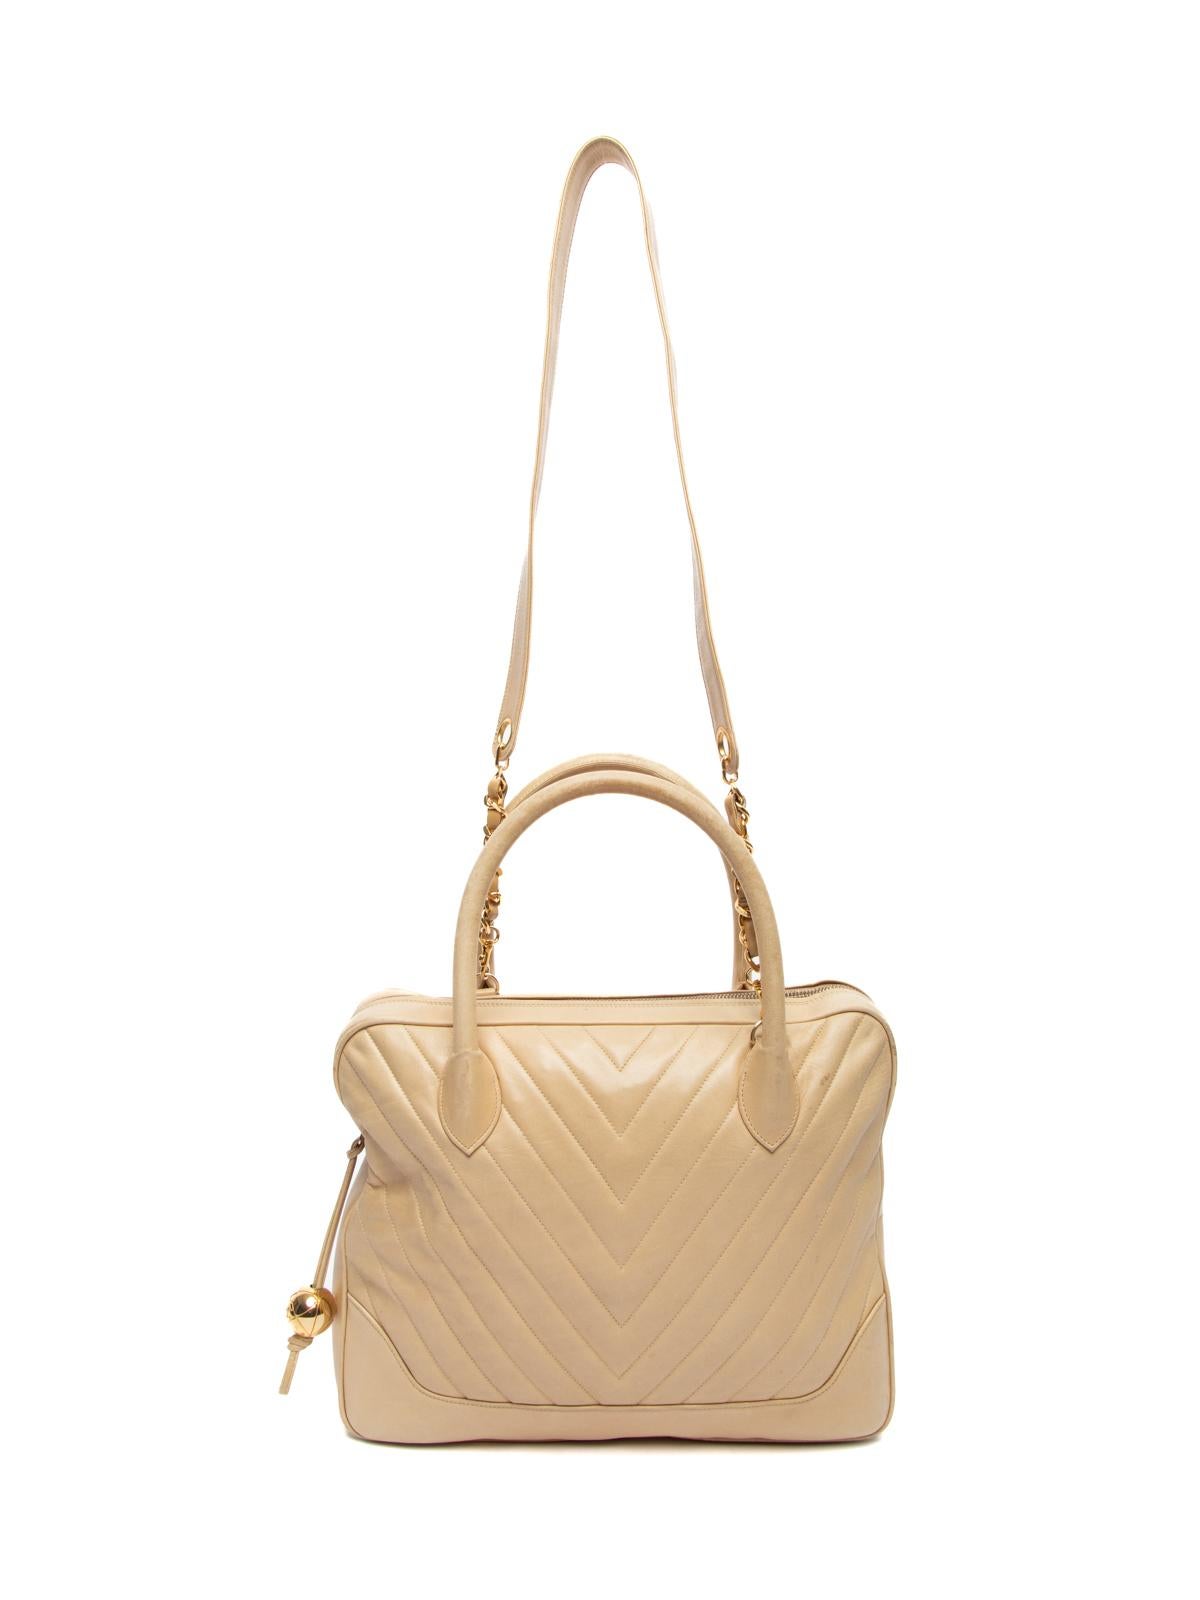 Chanel Women's Vintage Chevron Gold Hardware Top Handle Bag Beige 2